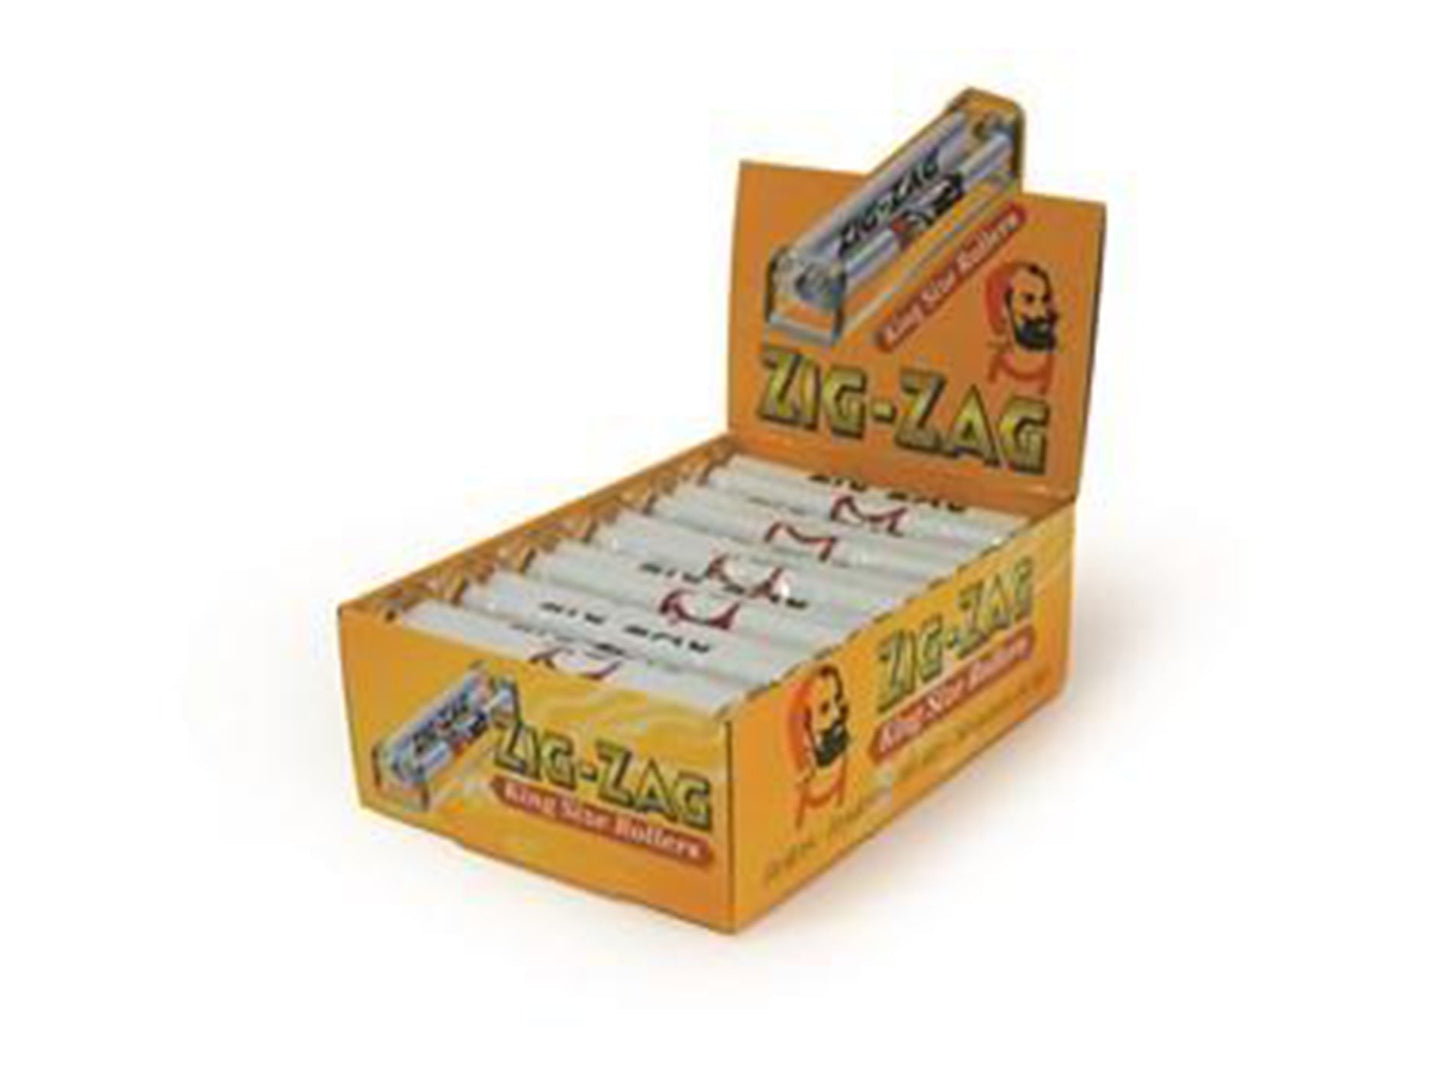 ZIG-ZAG King Size Rolling Machine 12 Per Box - VIR Wholesale